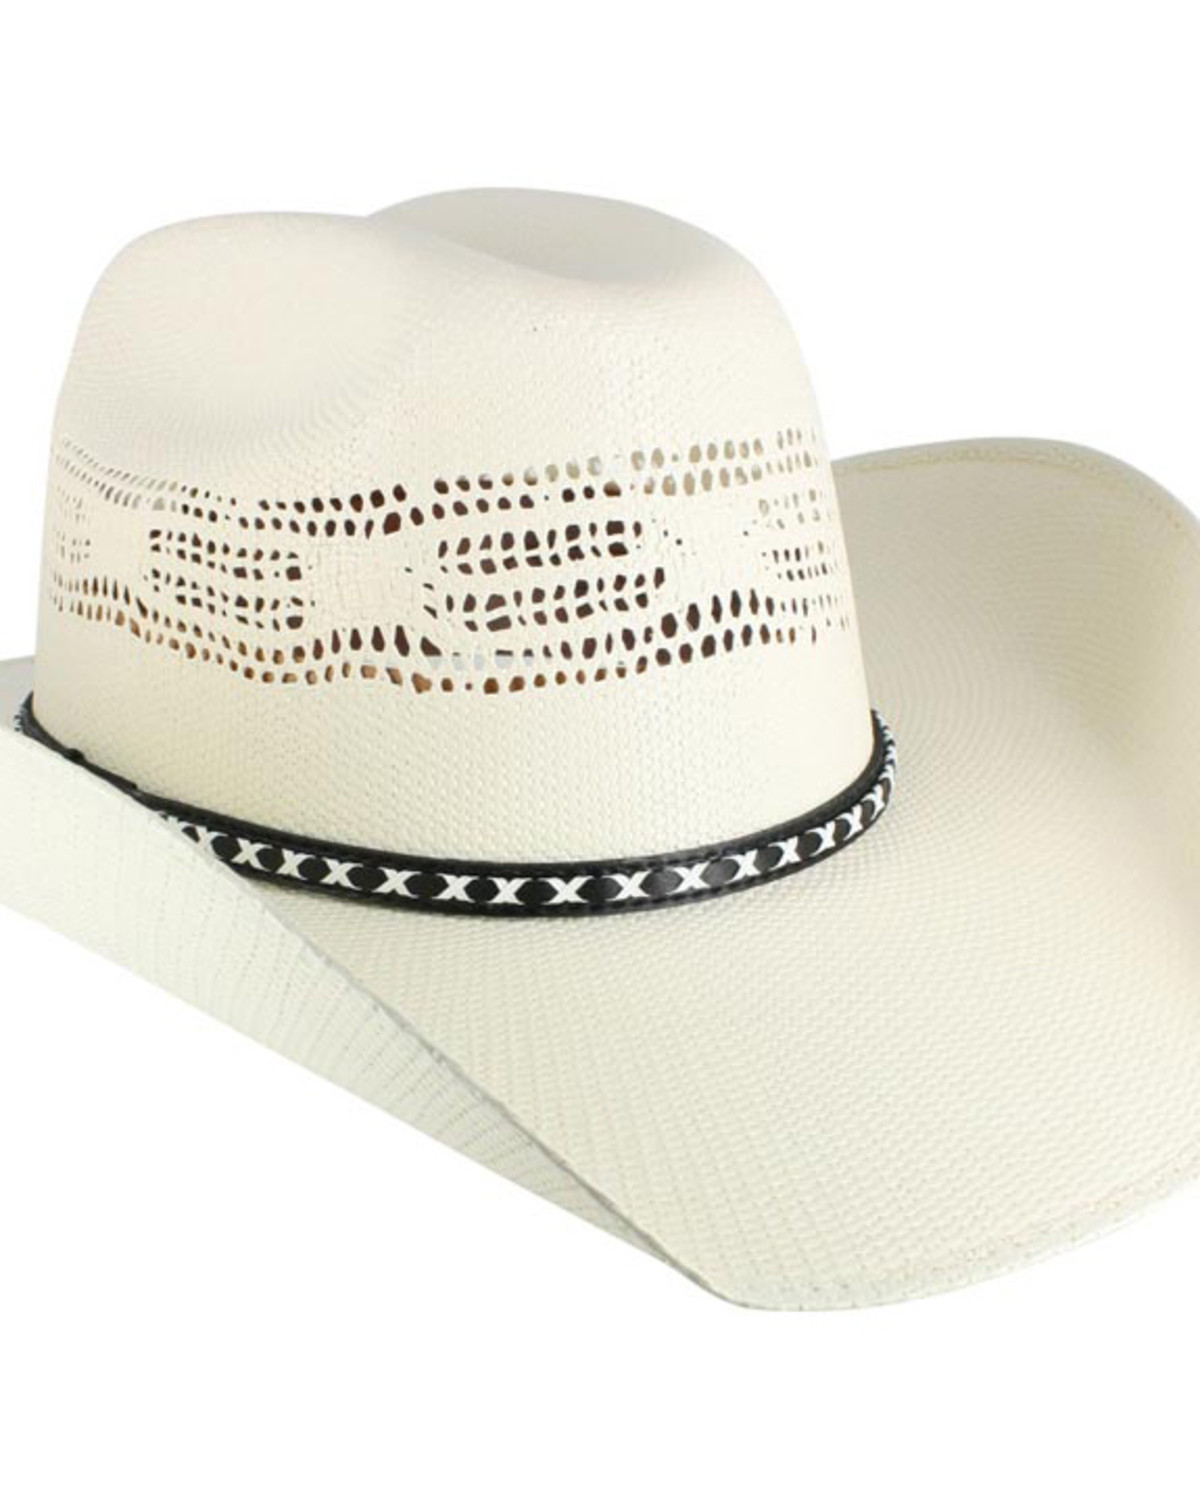 Brown Cowboy Hats